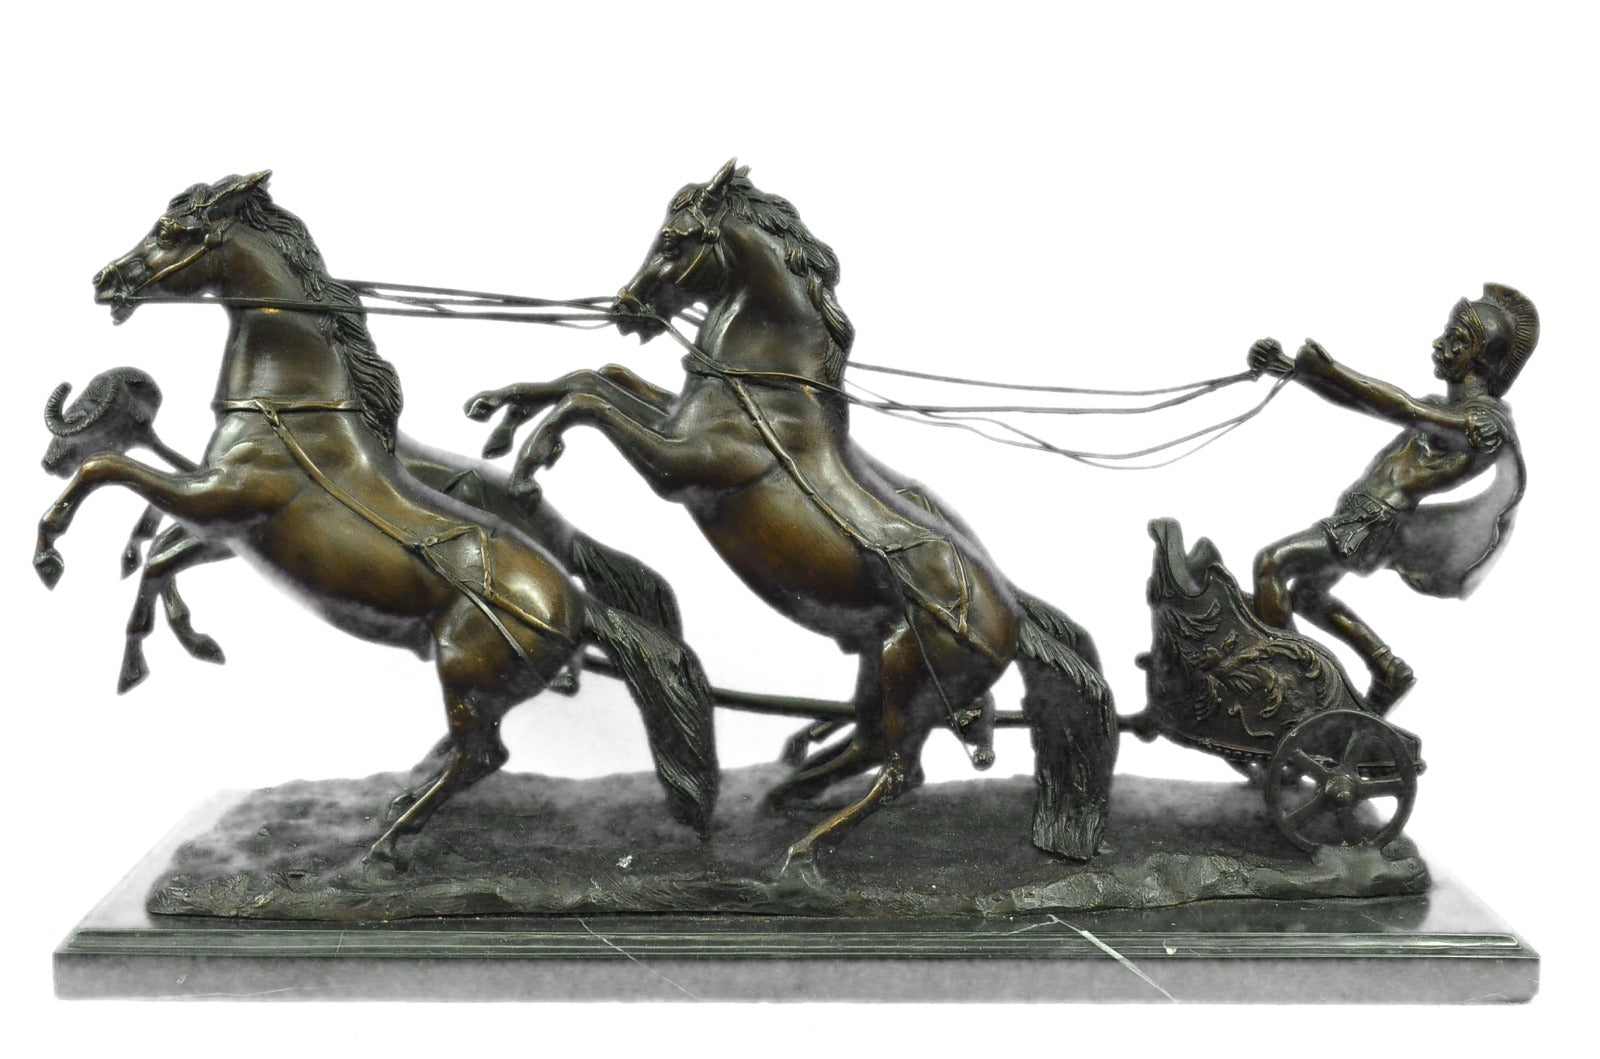 Real Bronze Sculpture Collector Edition Roman Chariot Collectible Statue Decor